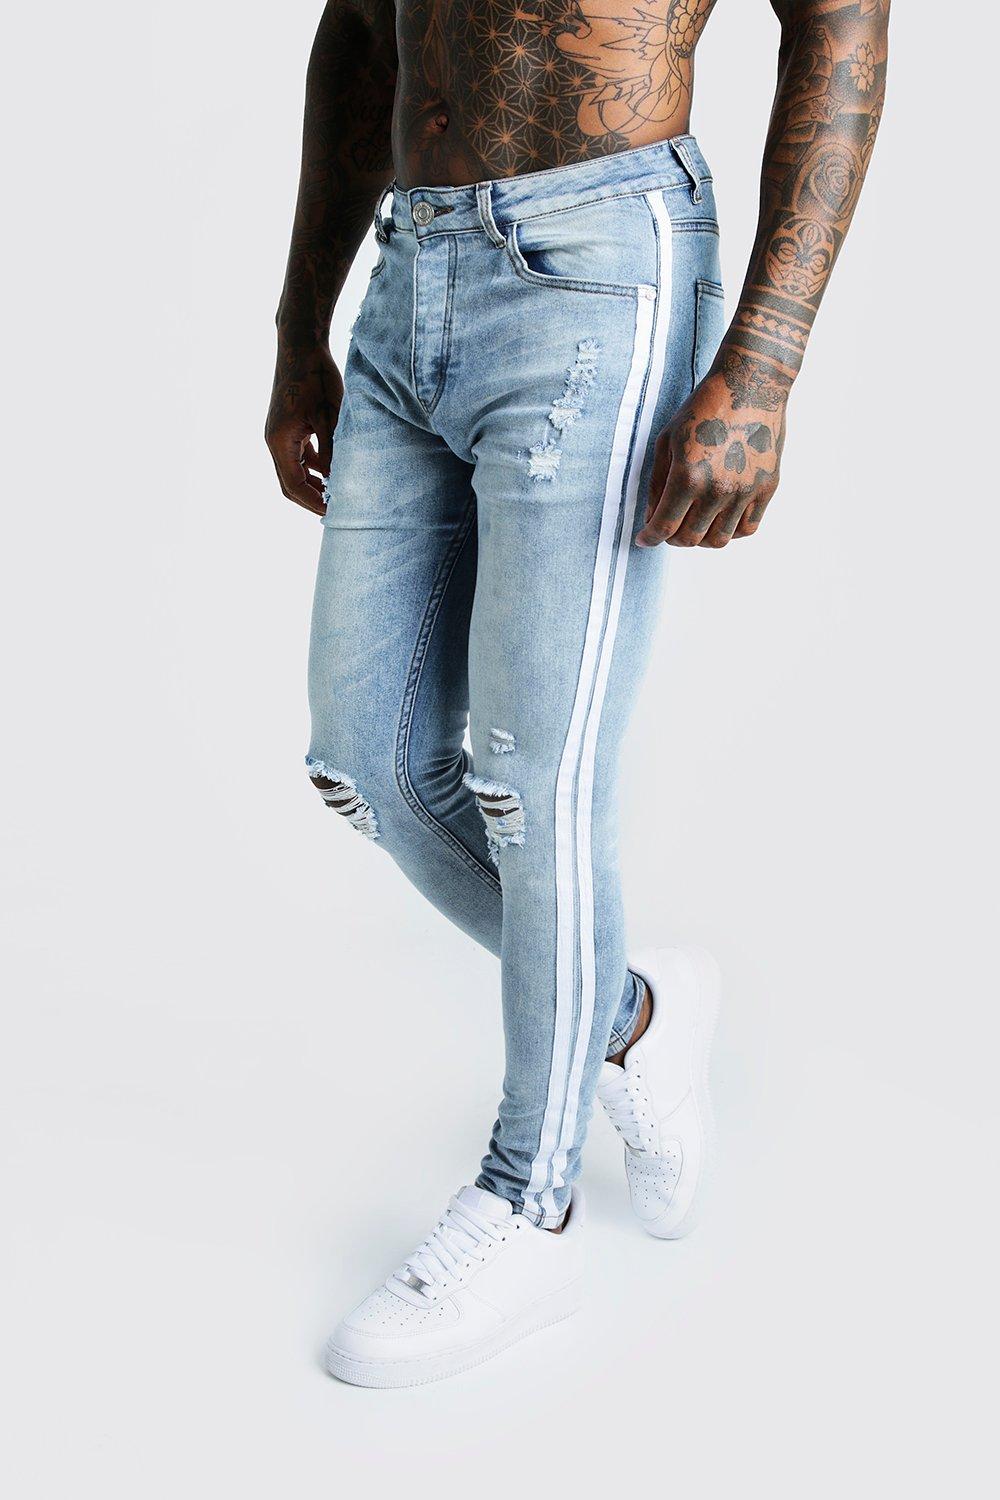 distressed jeans australia